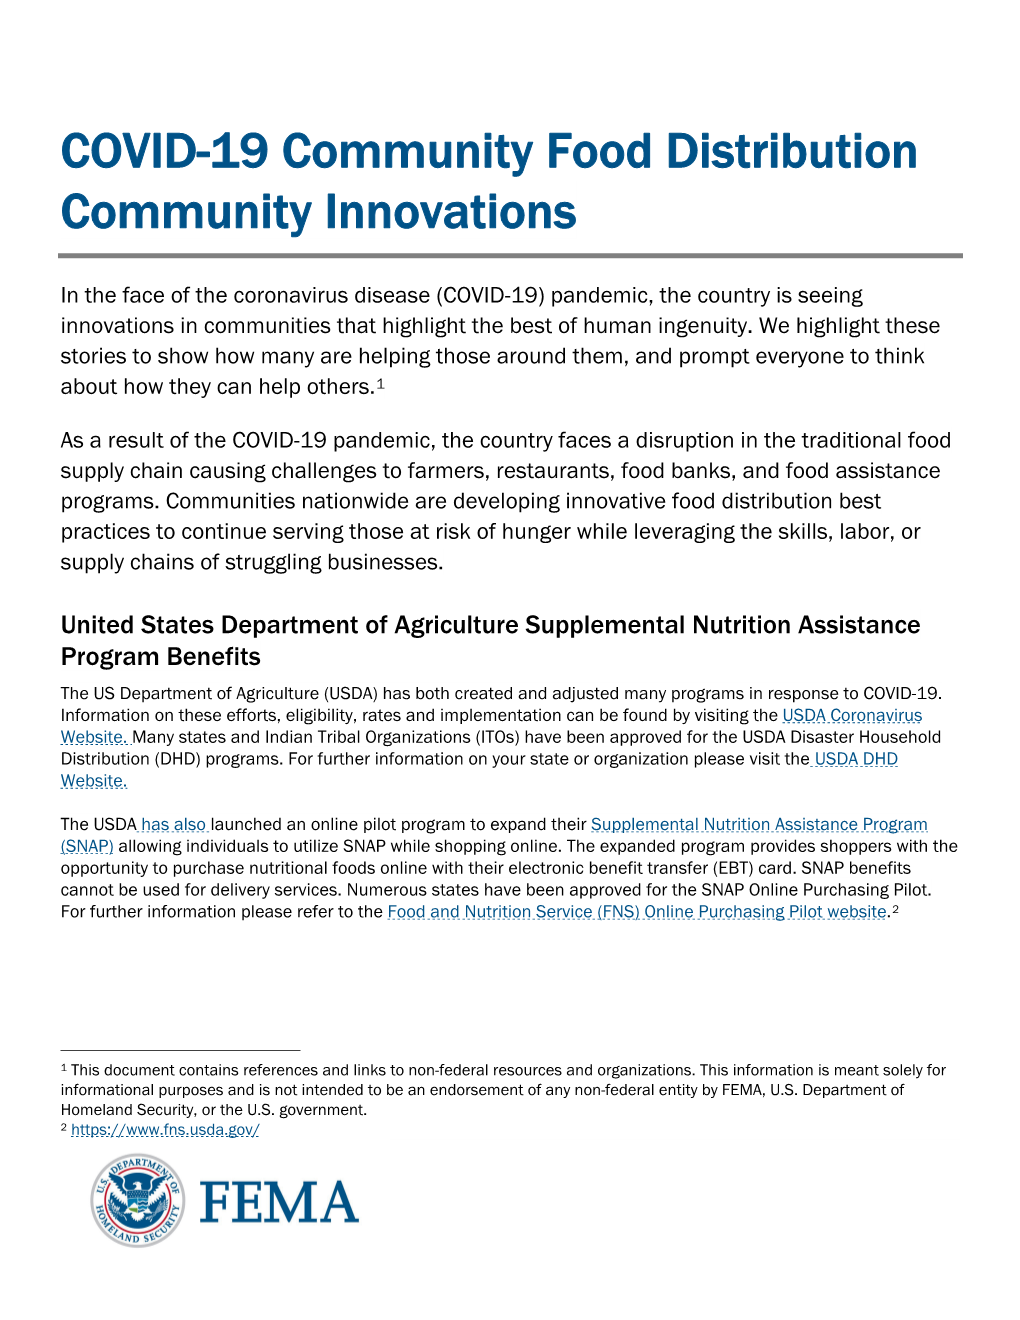 COVID-19 Community Food Distribution Community Innovations